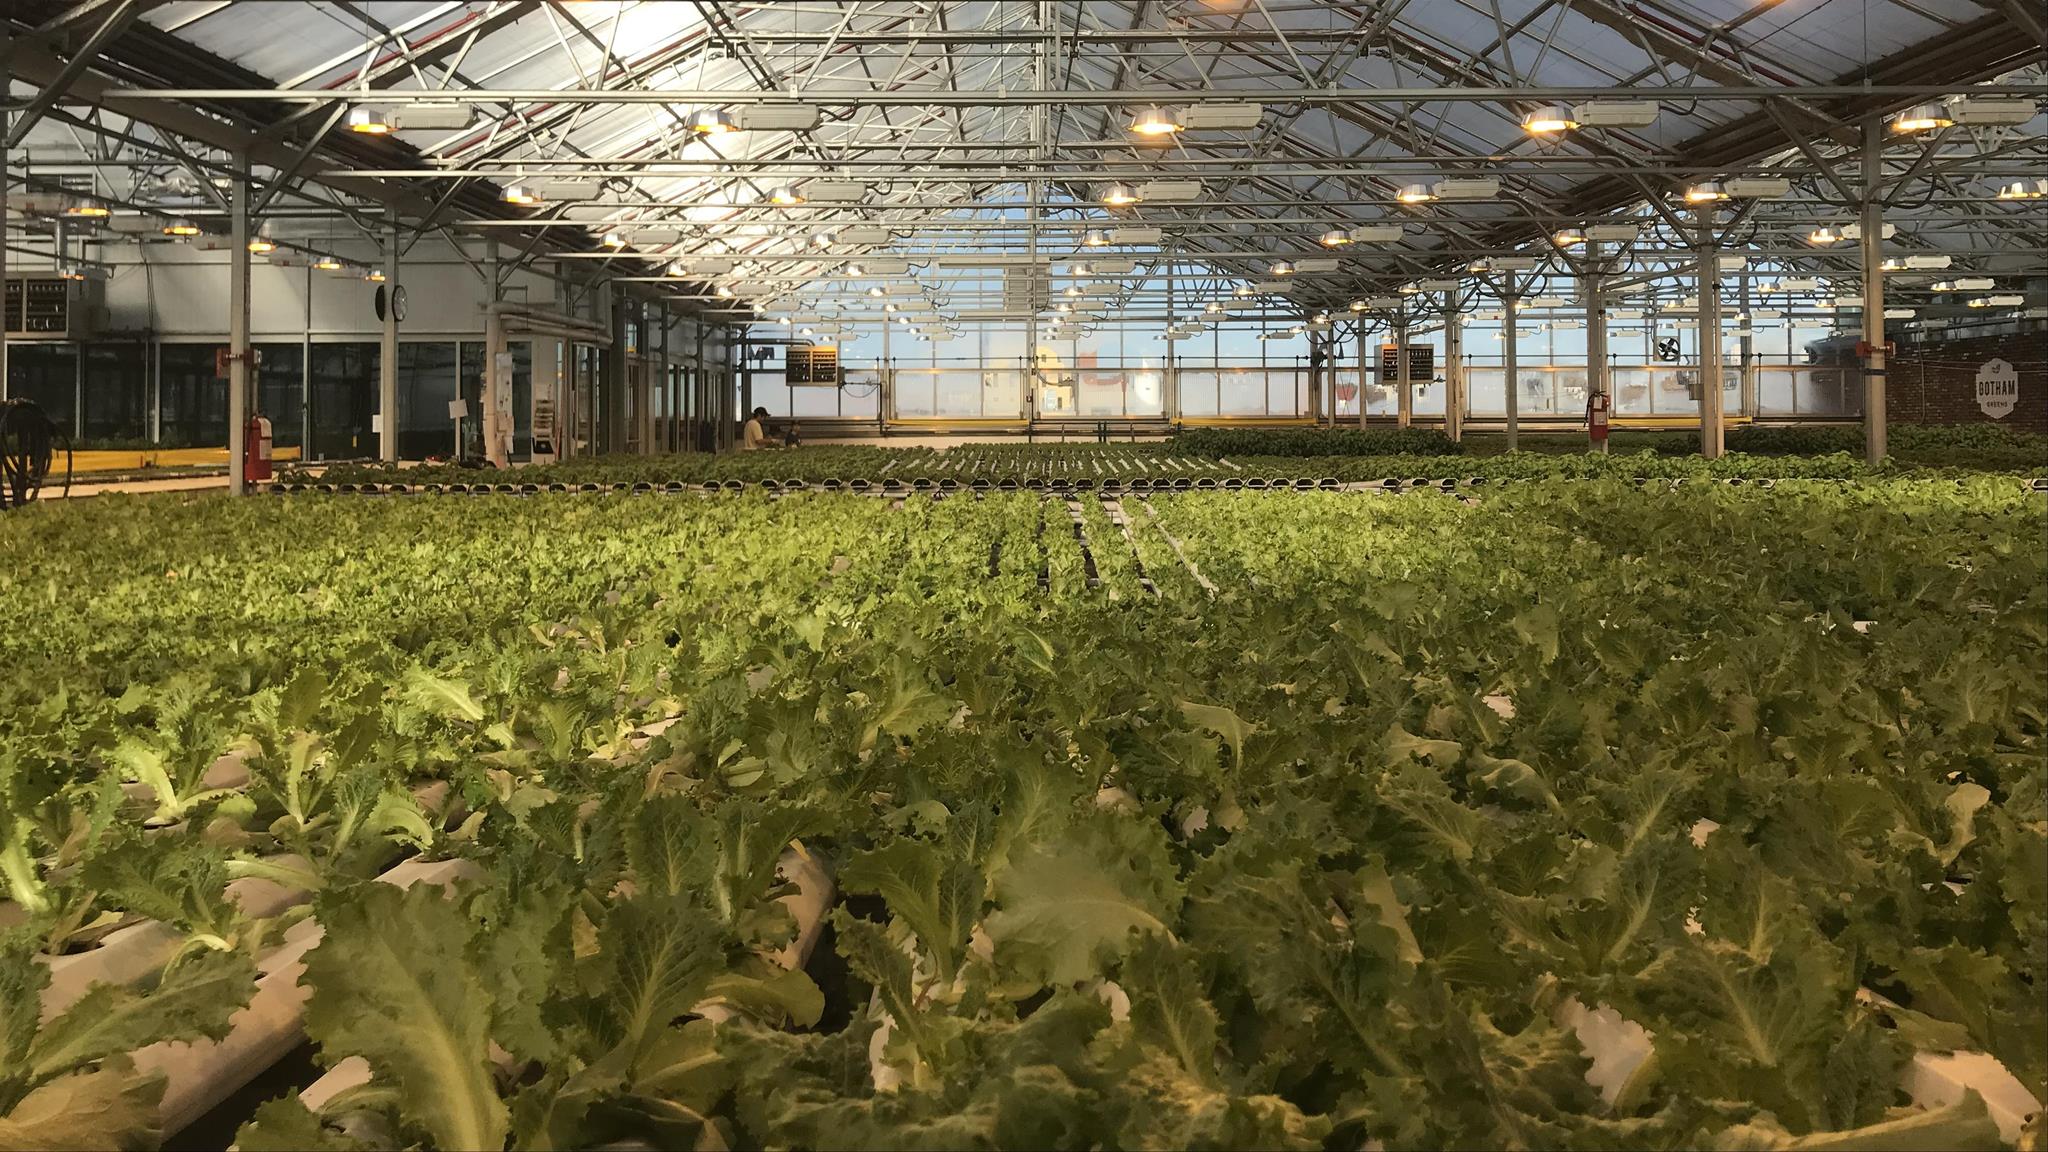 NYC indoor farming startup Gotham Greens raises $310 million